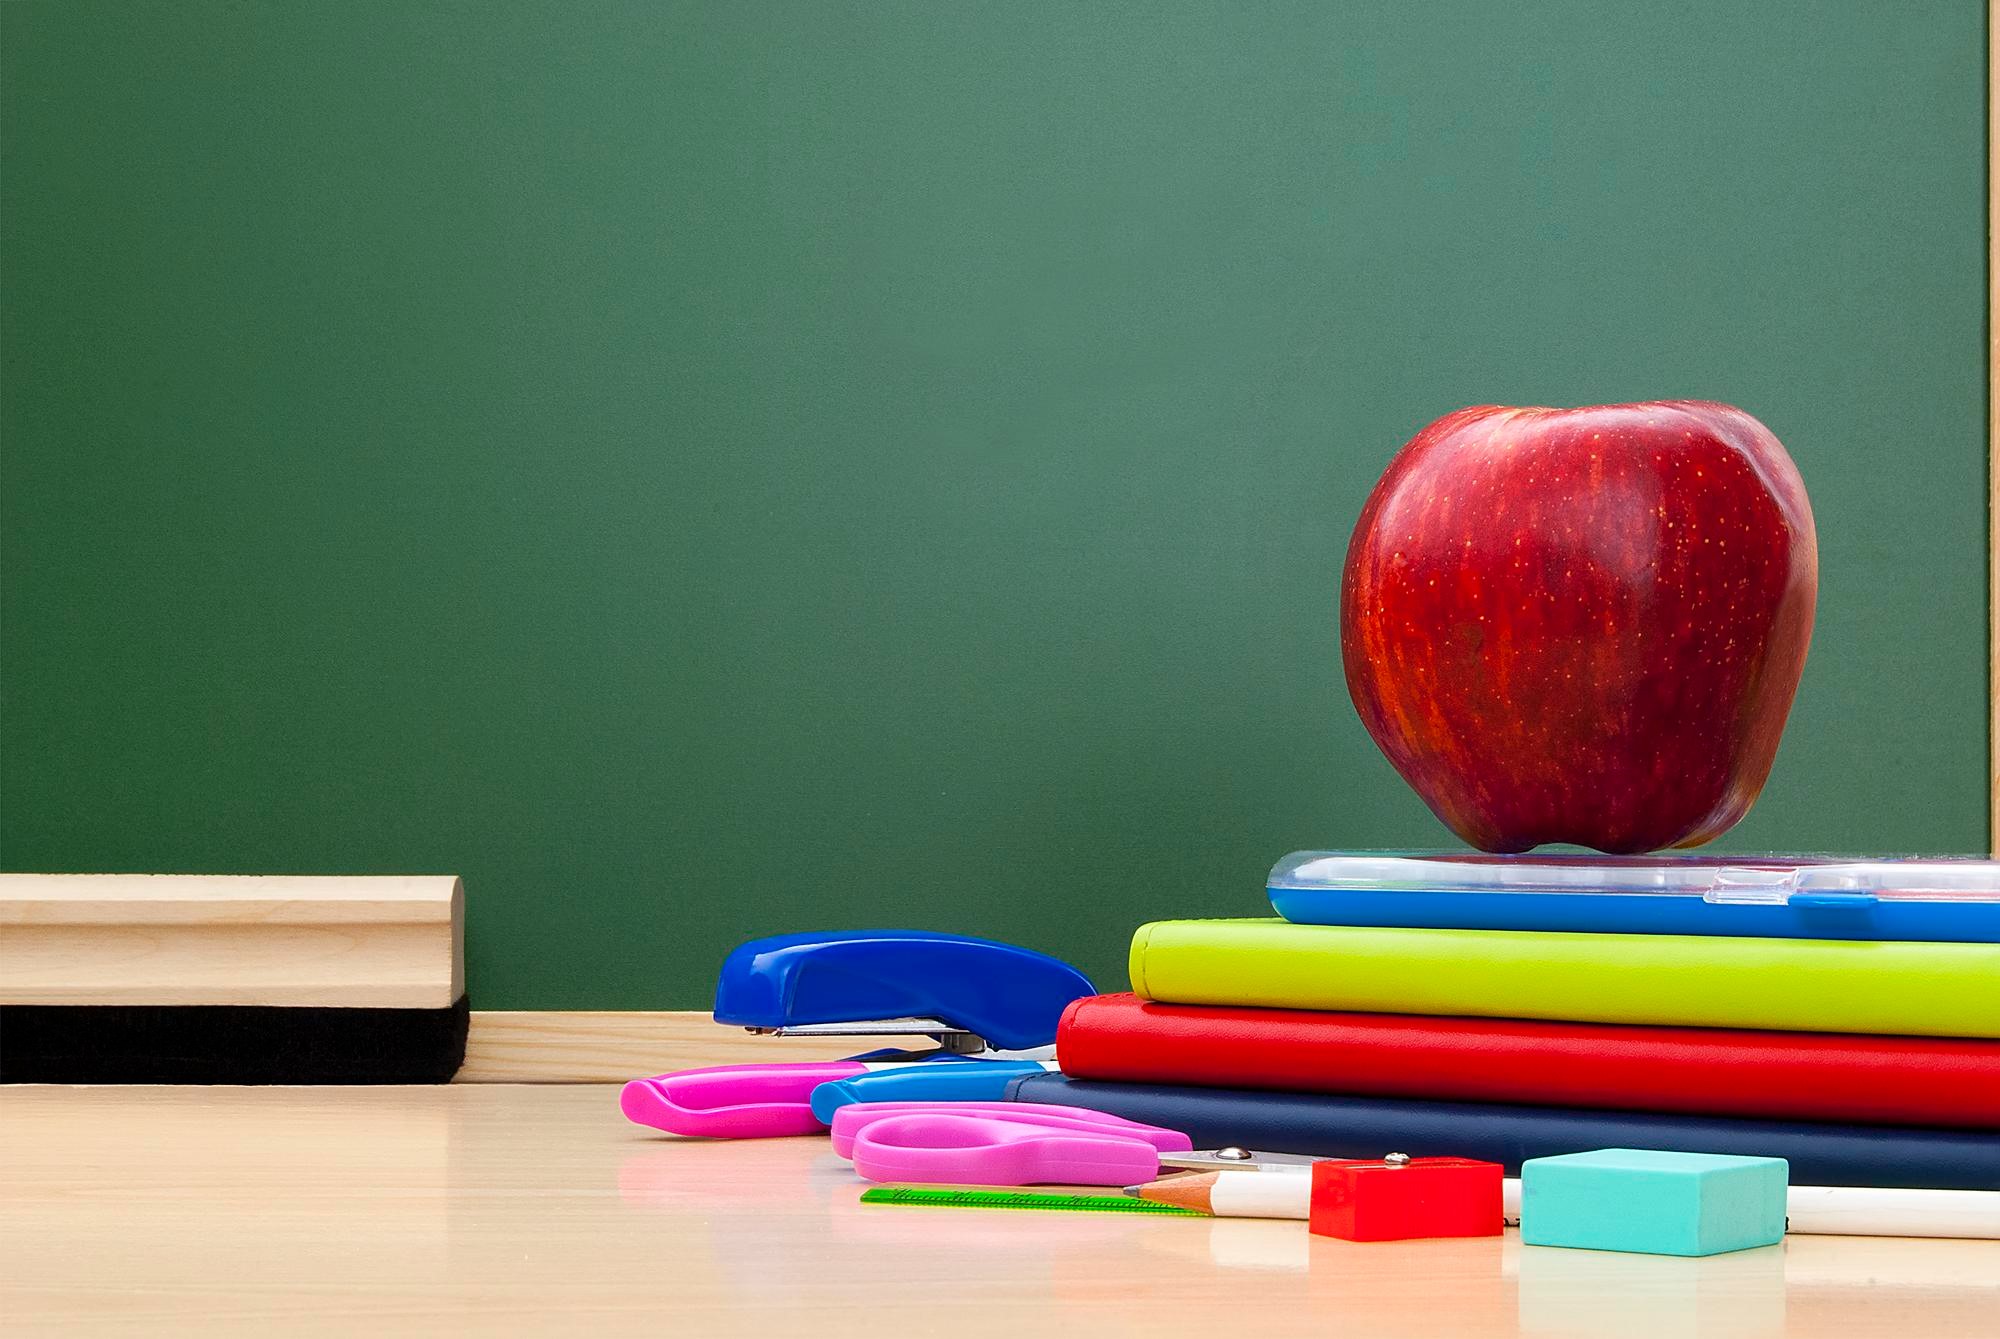 school supplies on a desk in front of a chalkboard